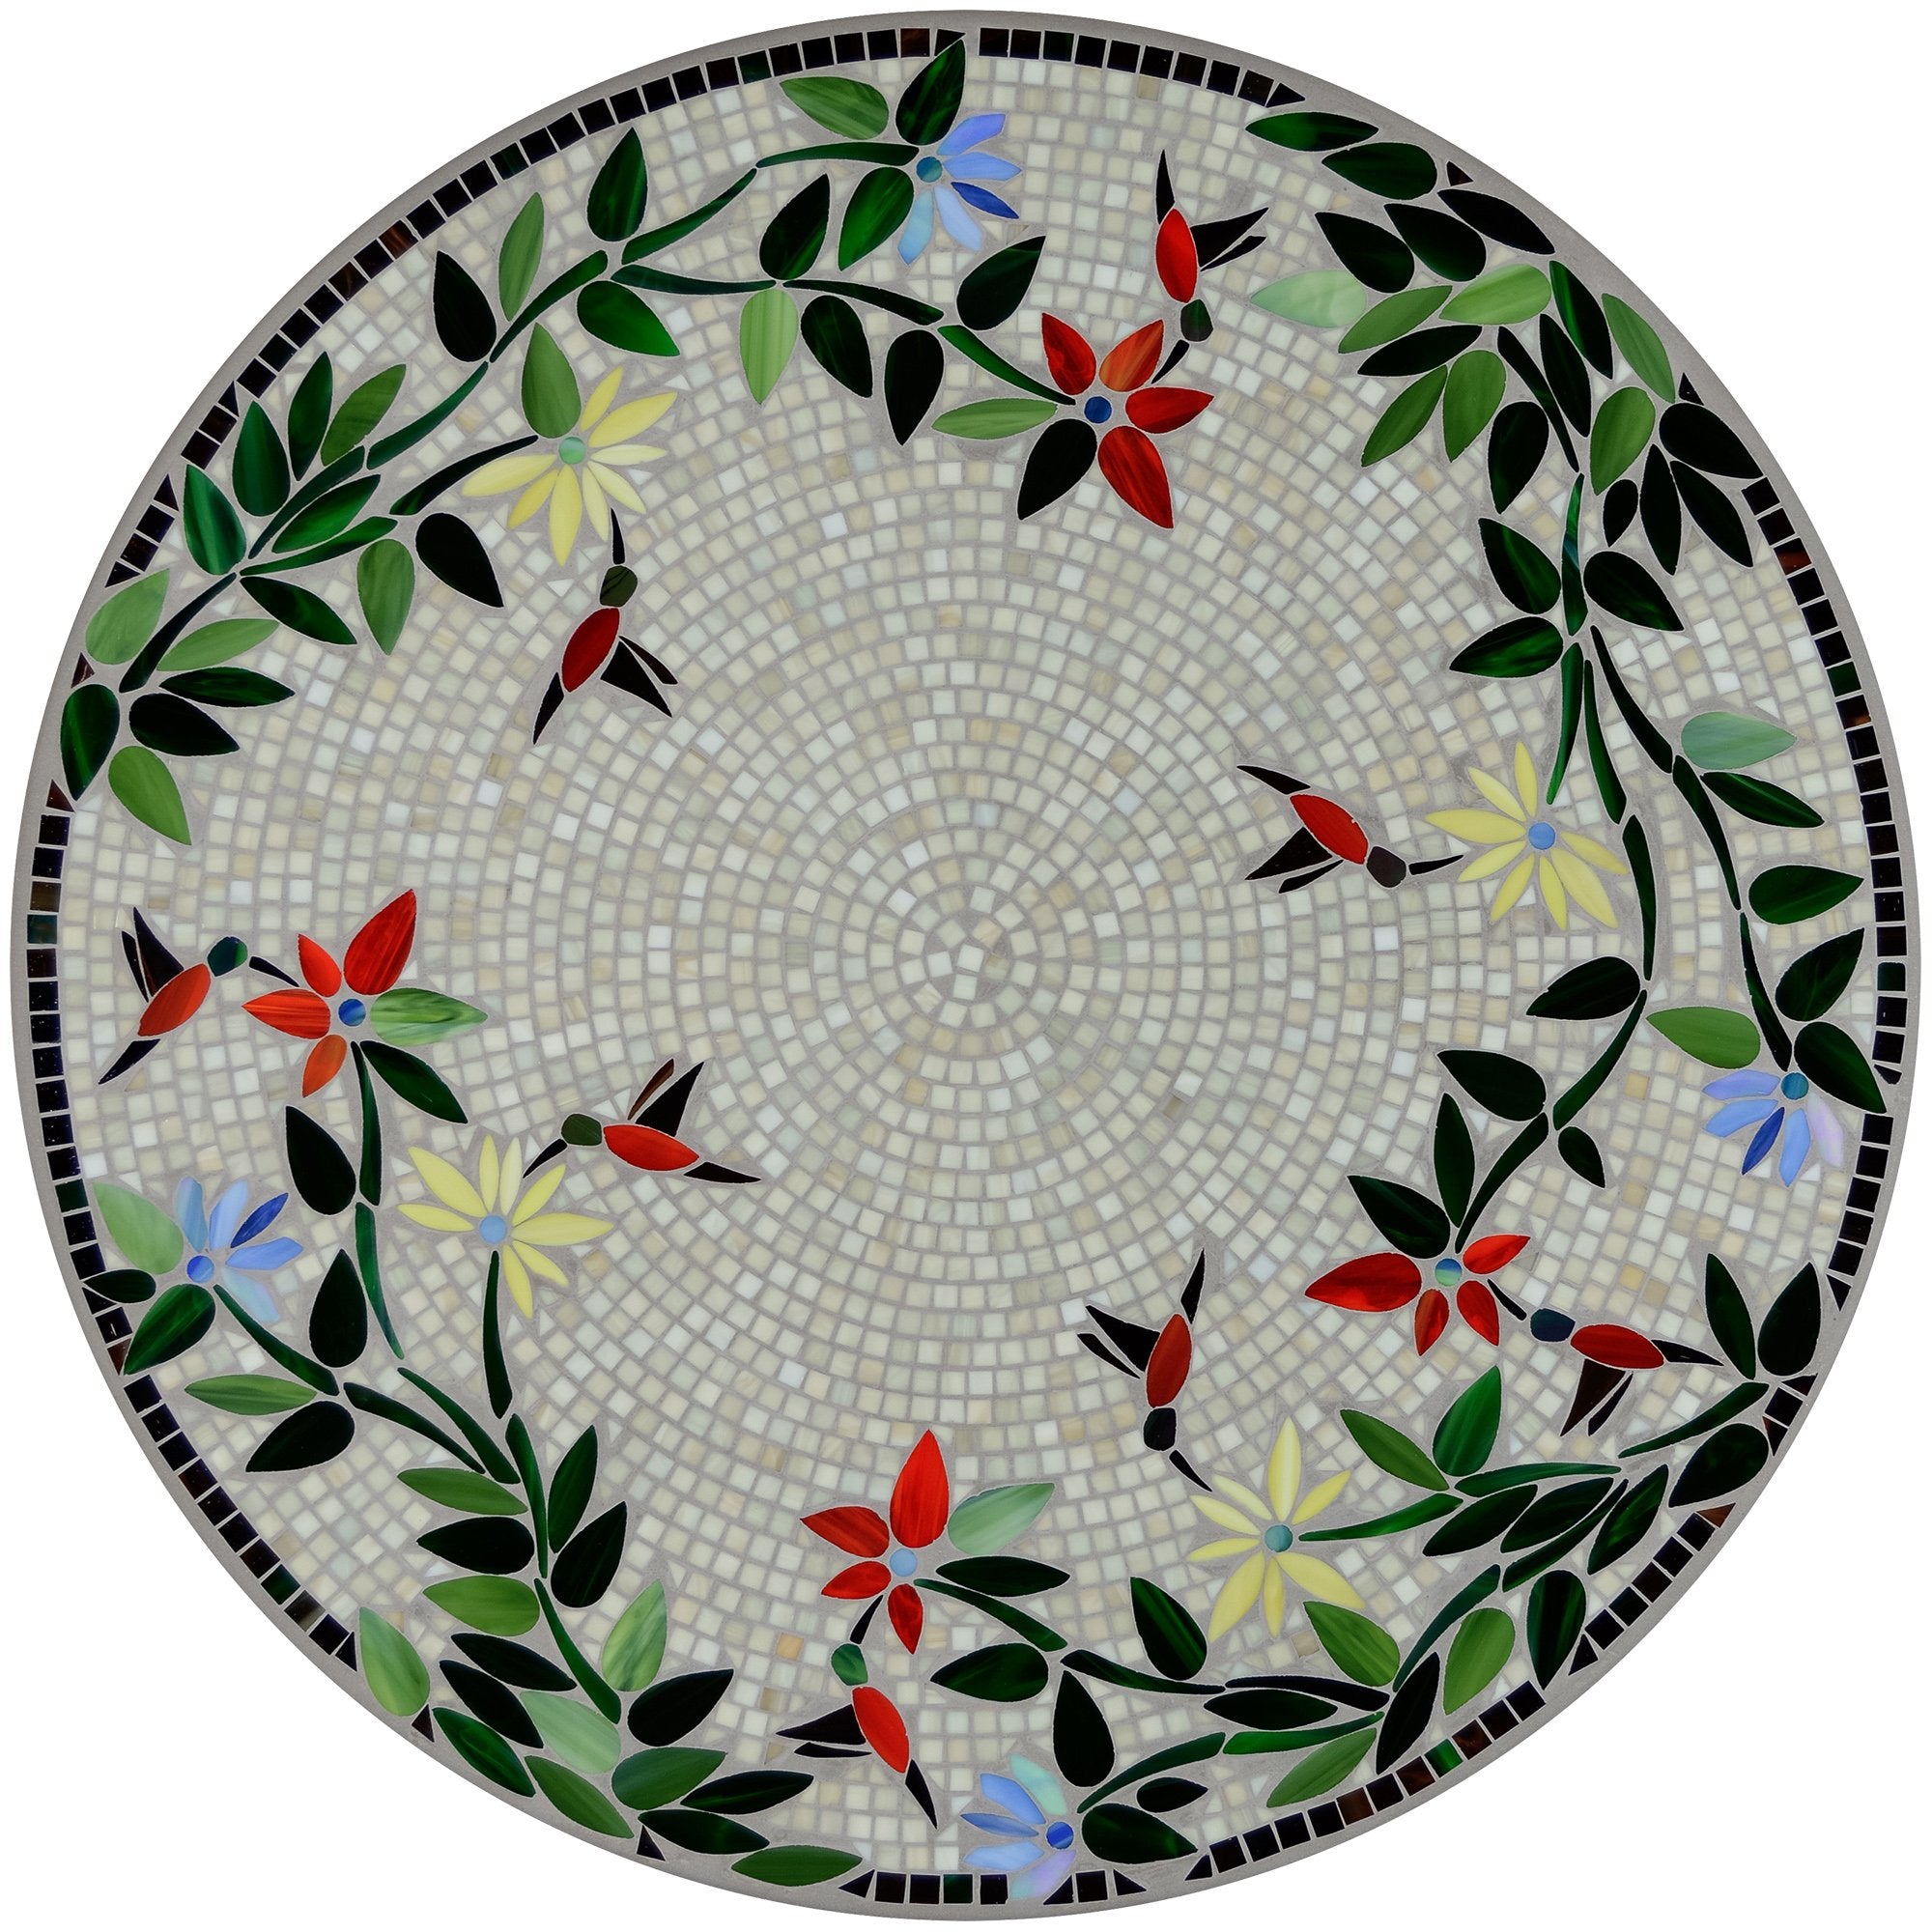 Hummingbird Mosaic Design